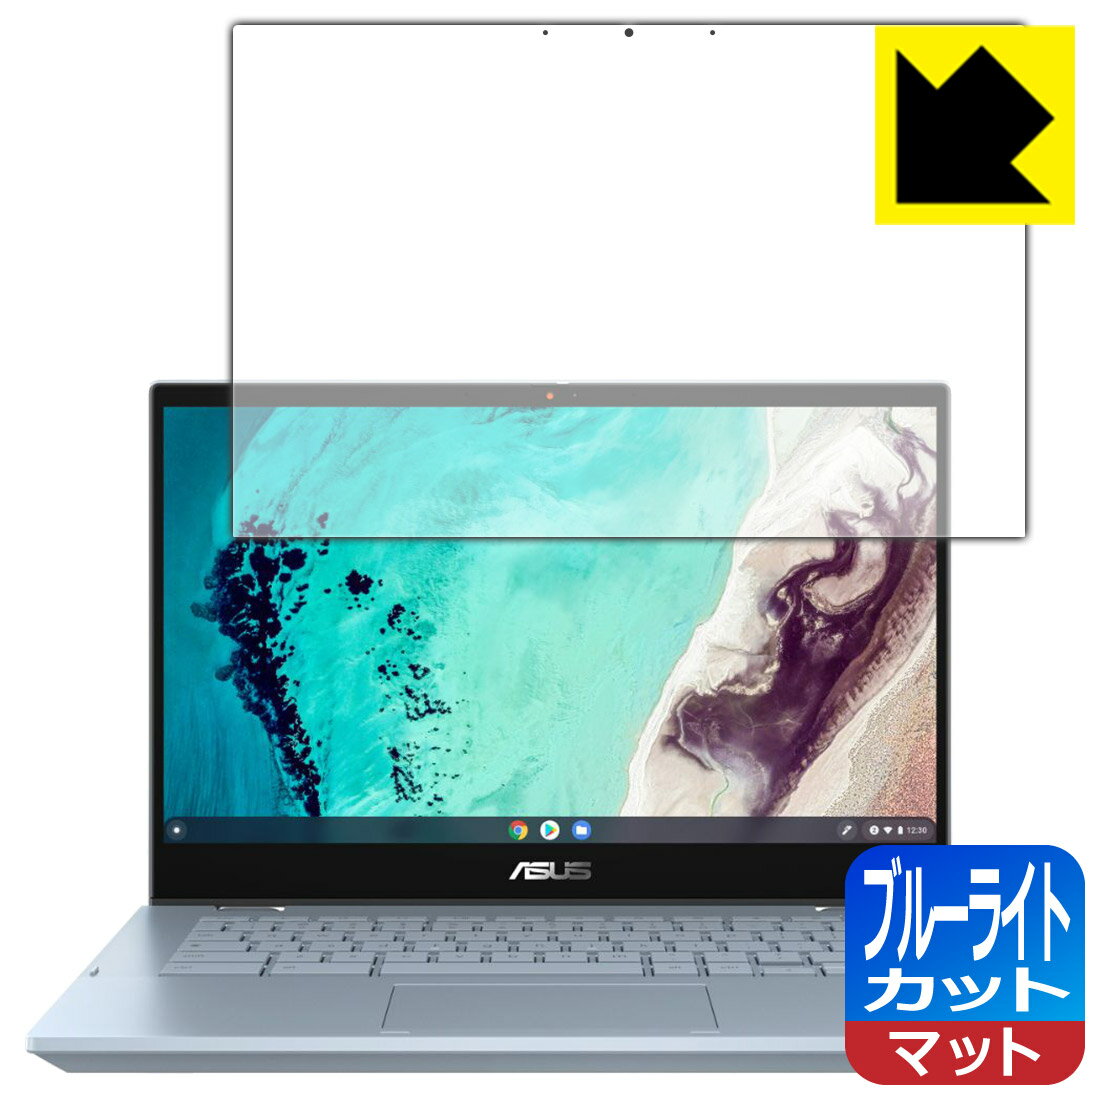 u[CgJbgy˒ጸzیtB ASUS Chromebook Flip CX3 (CX3400FMA) { А